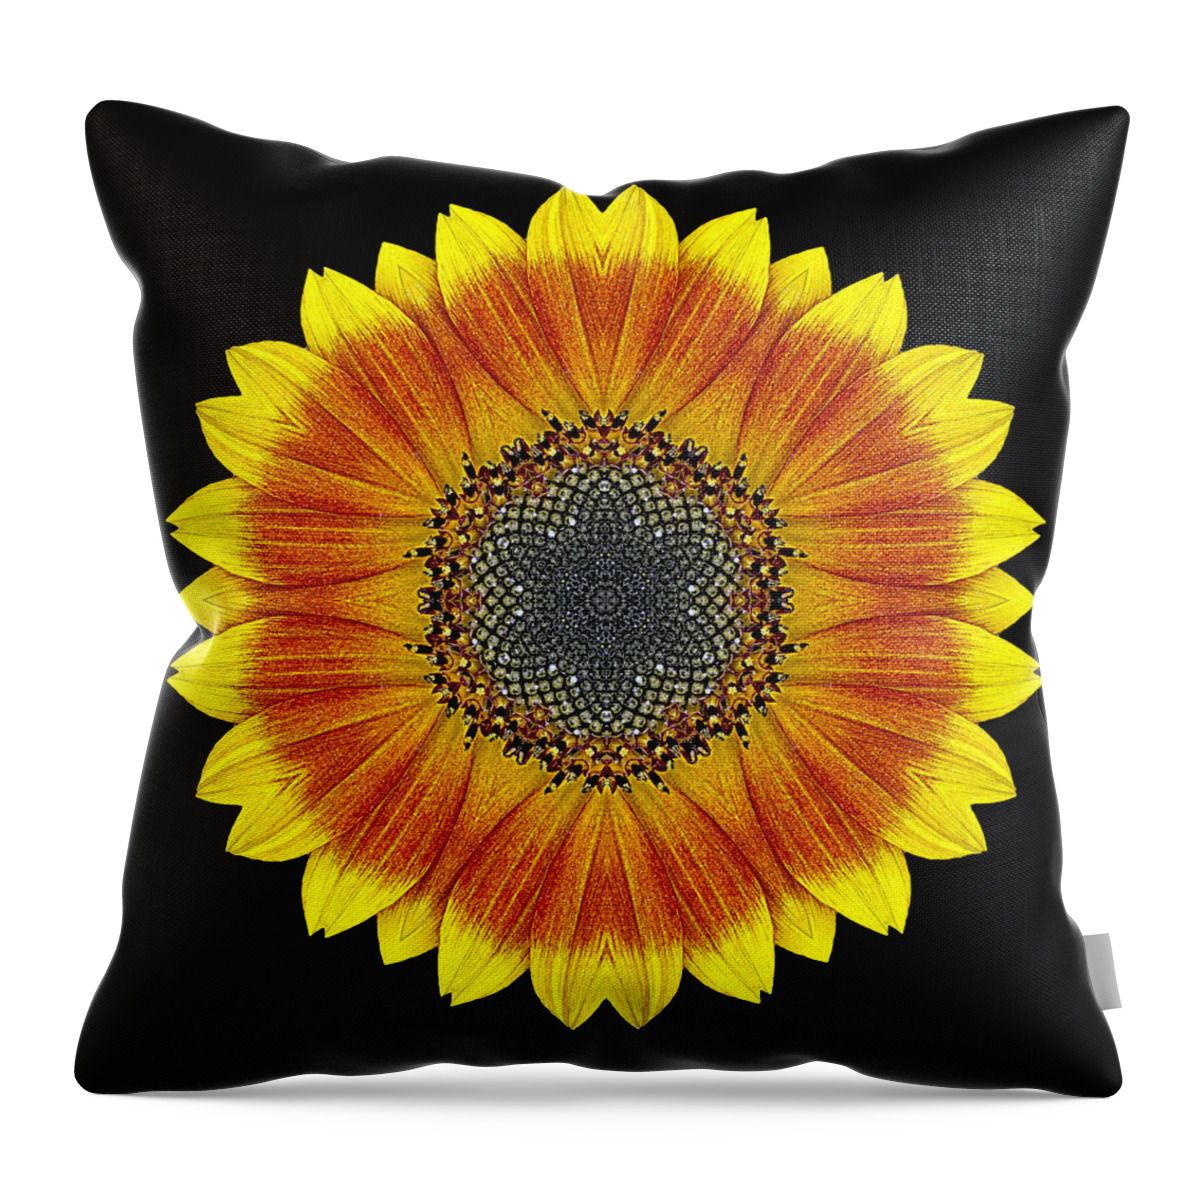 Flower Throw Pillow featuring the photograph Orange and Yellow Sunflower Flower Mandala by David J Bookbinder